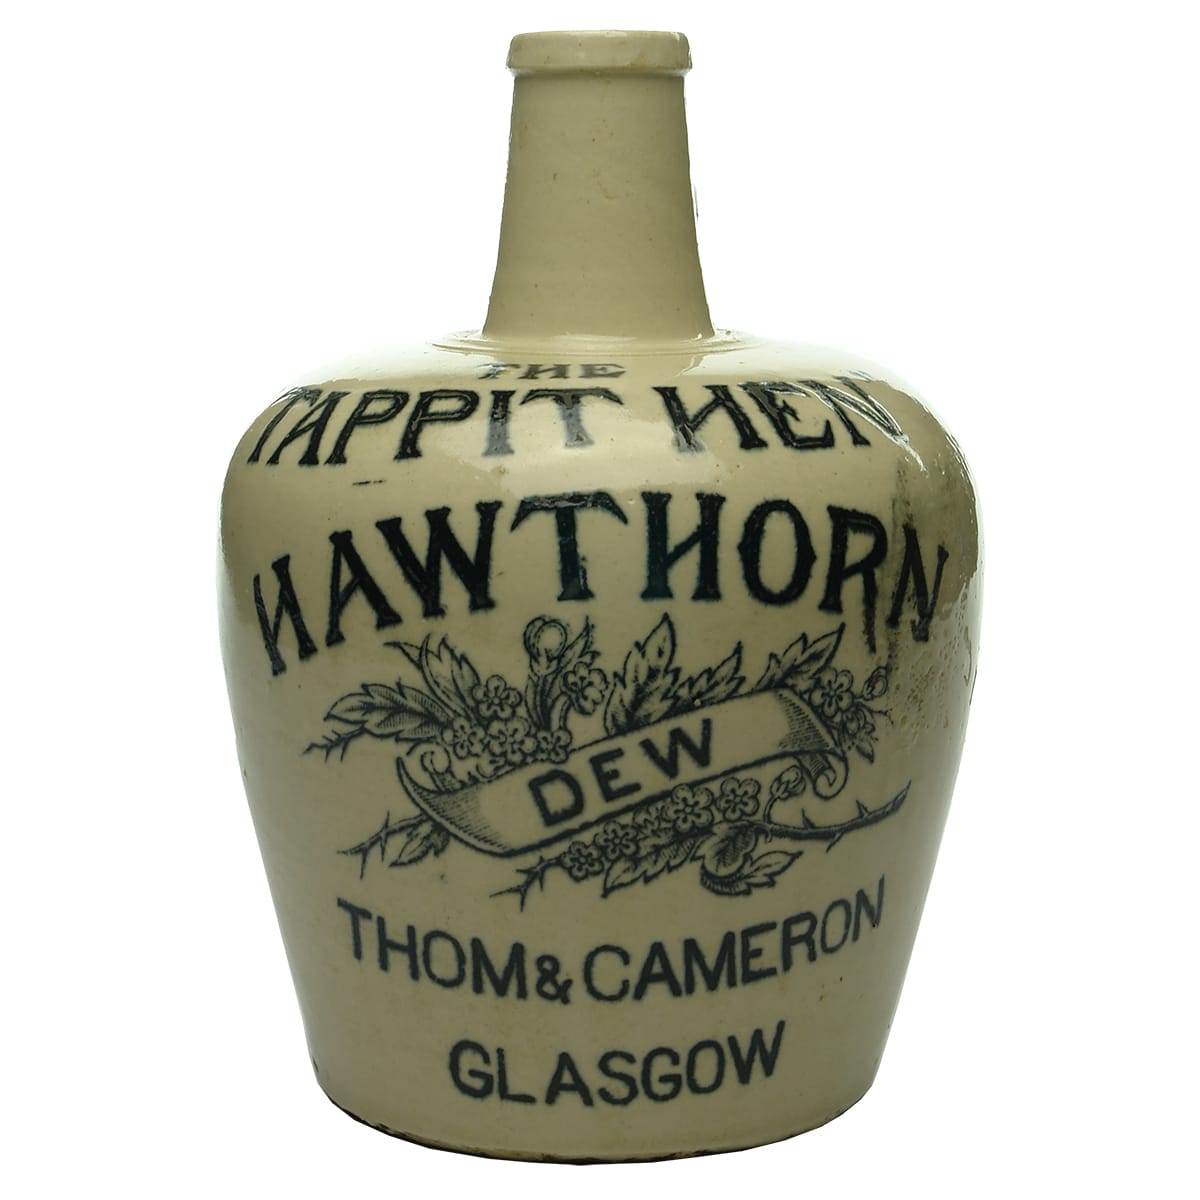 Whisky Jug. Tappit Hen, Hawthorn Dew, Thom & Cameron, Glasgow. Black & White.